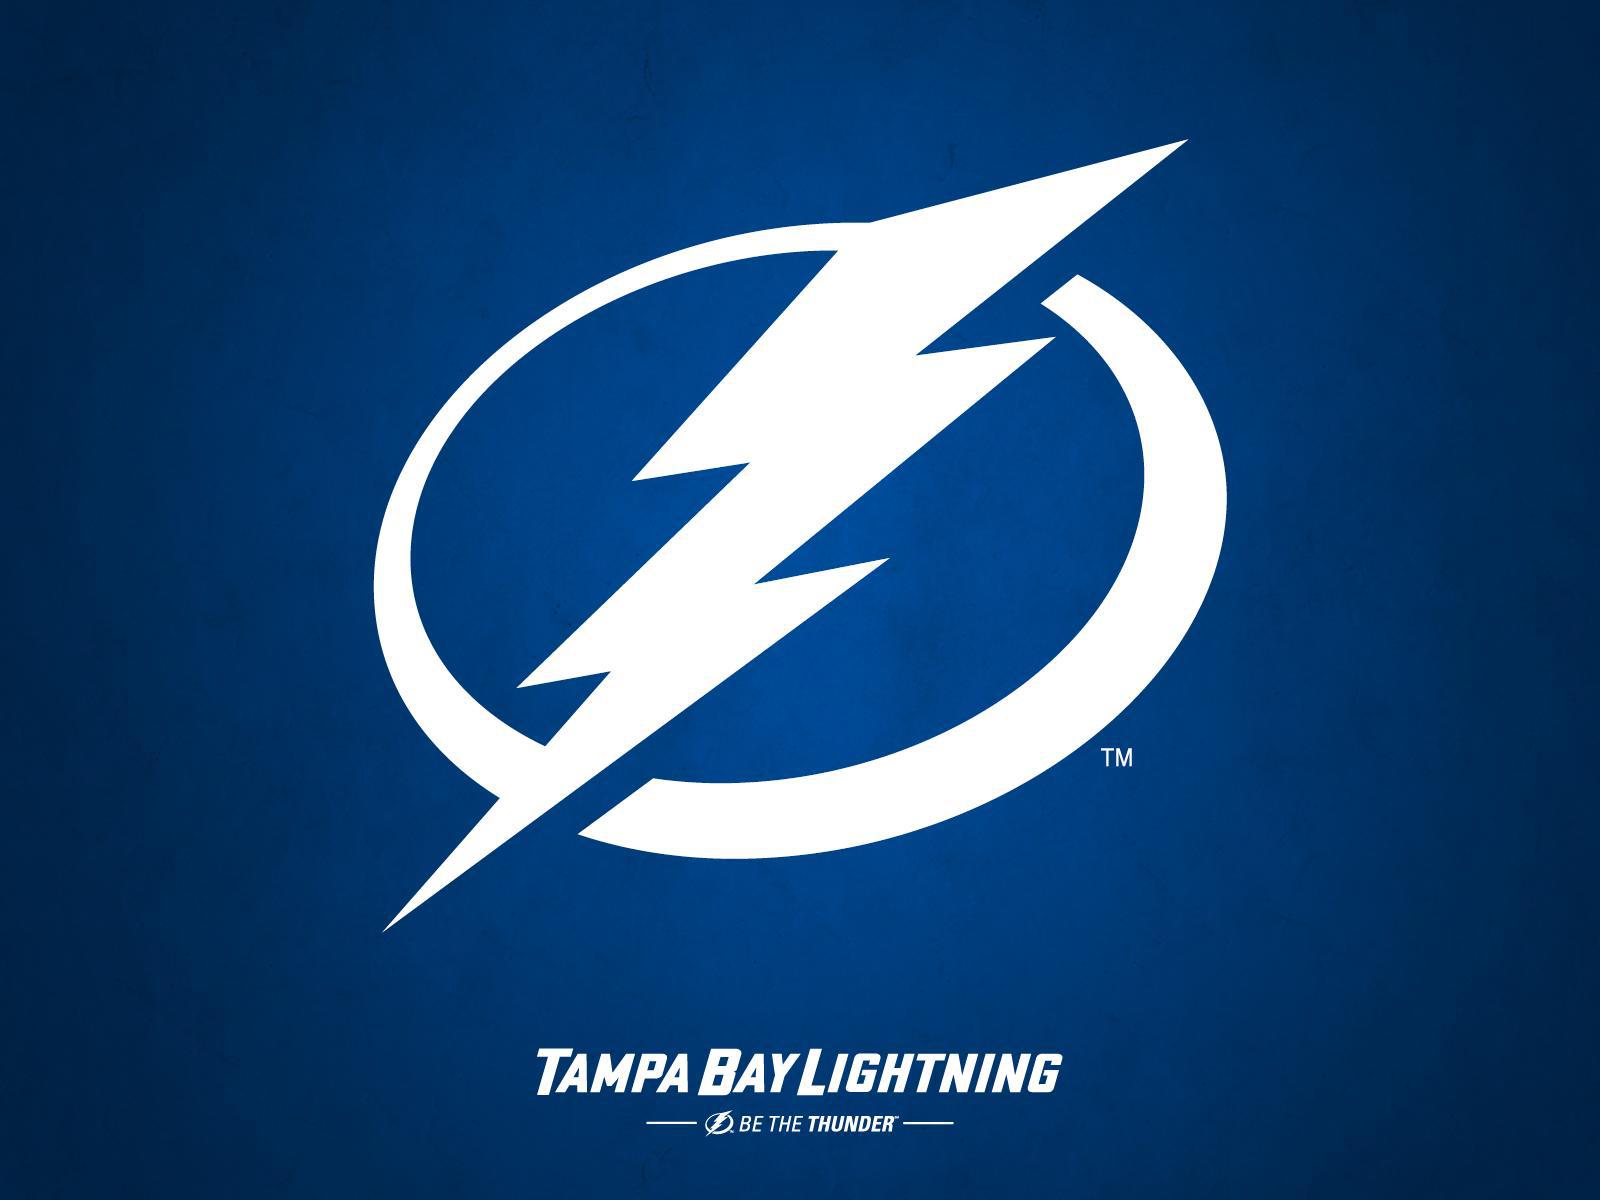 Tampa Bay Lightning Wallpaper Downloads   Wallpaper Downloads 1600x1200